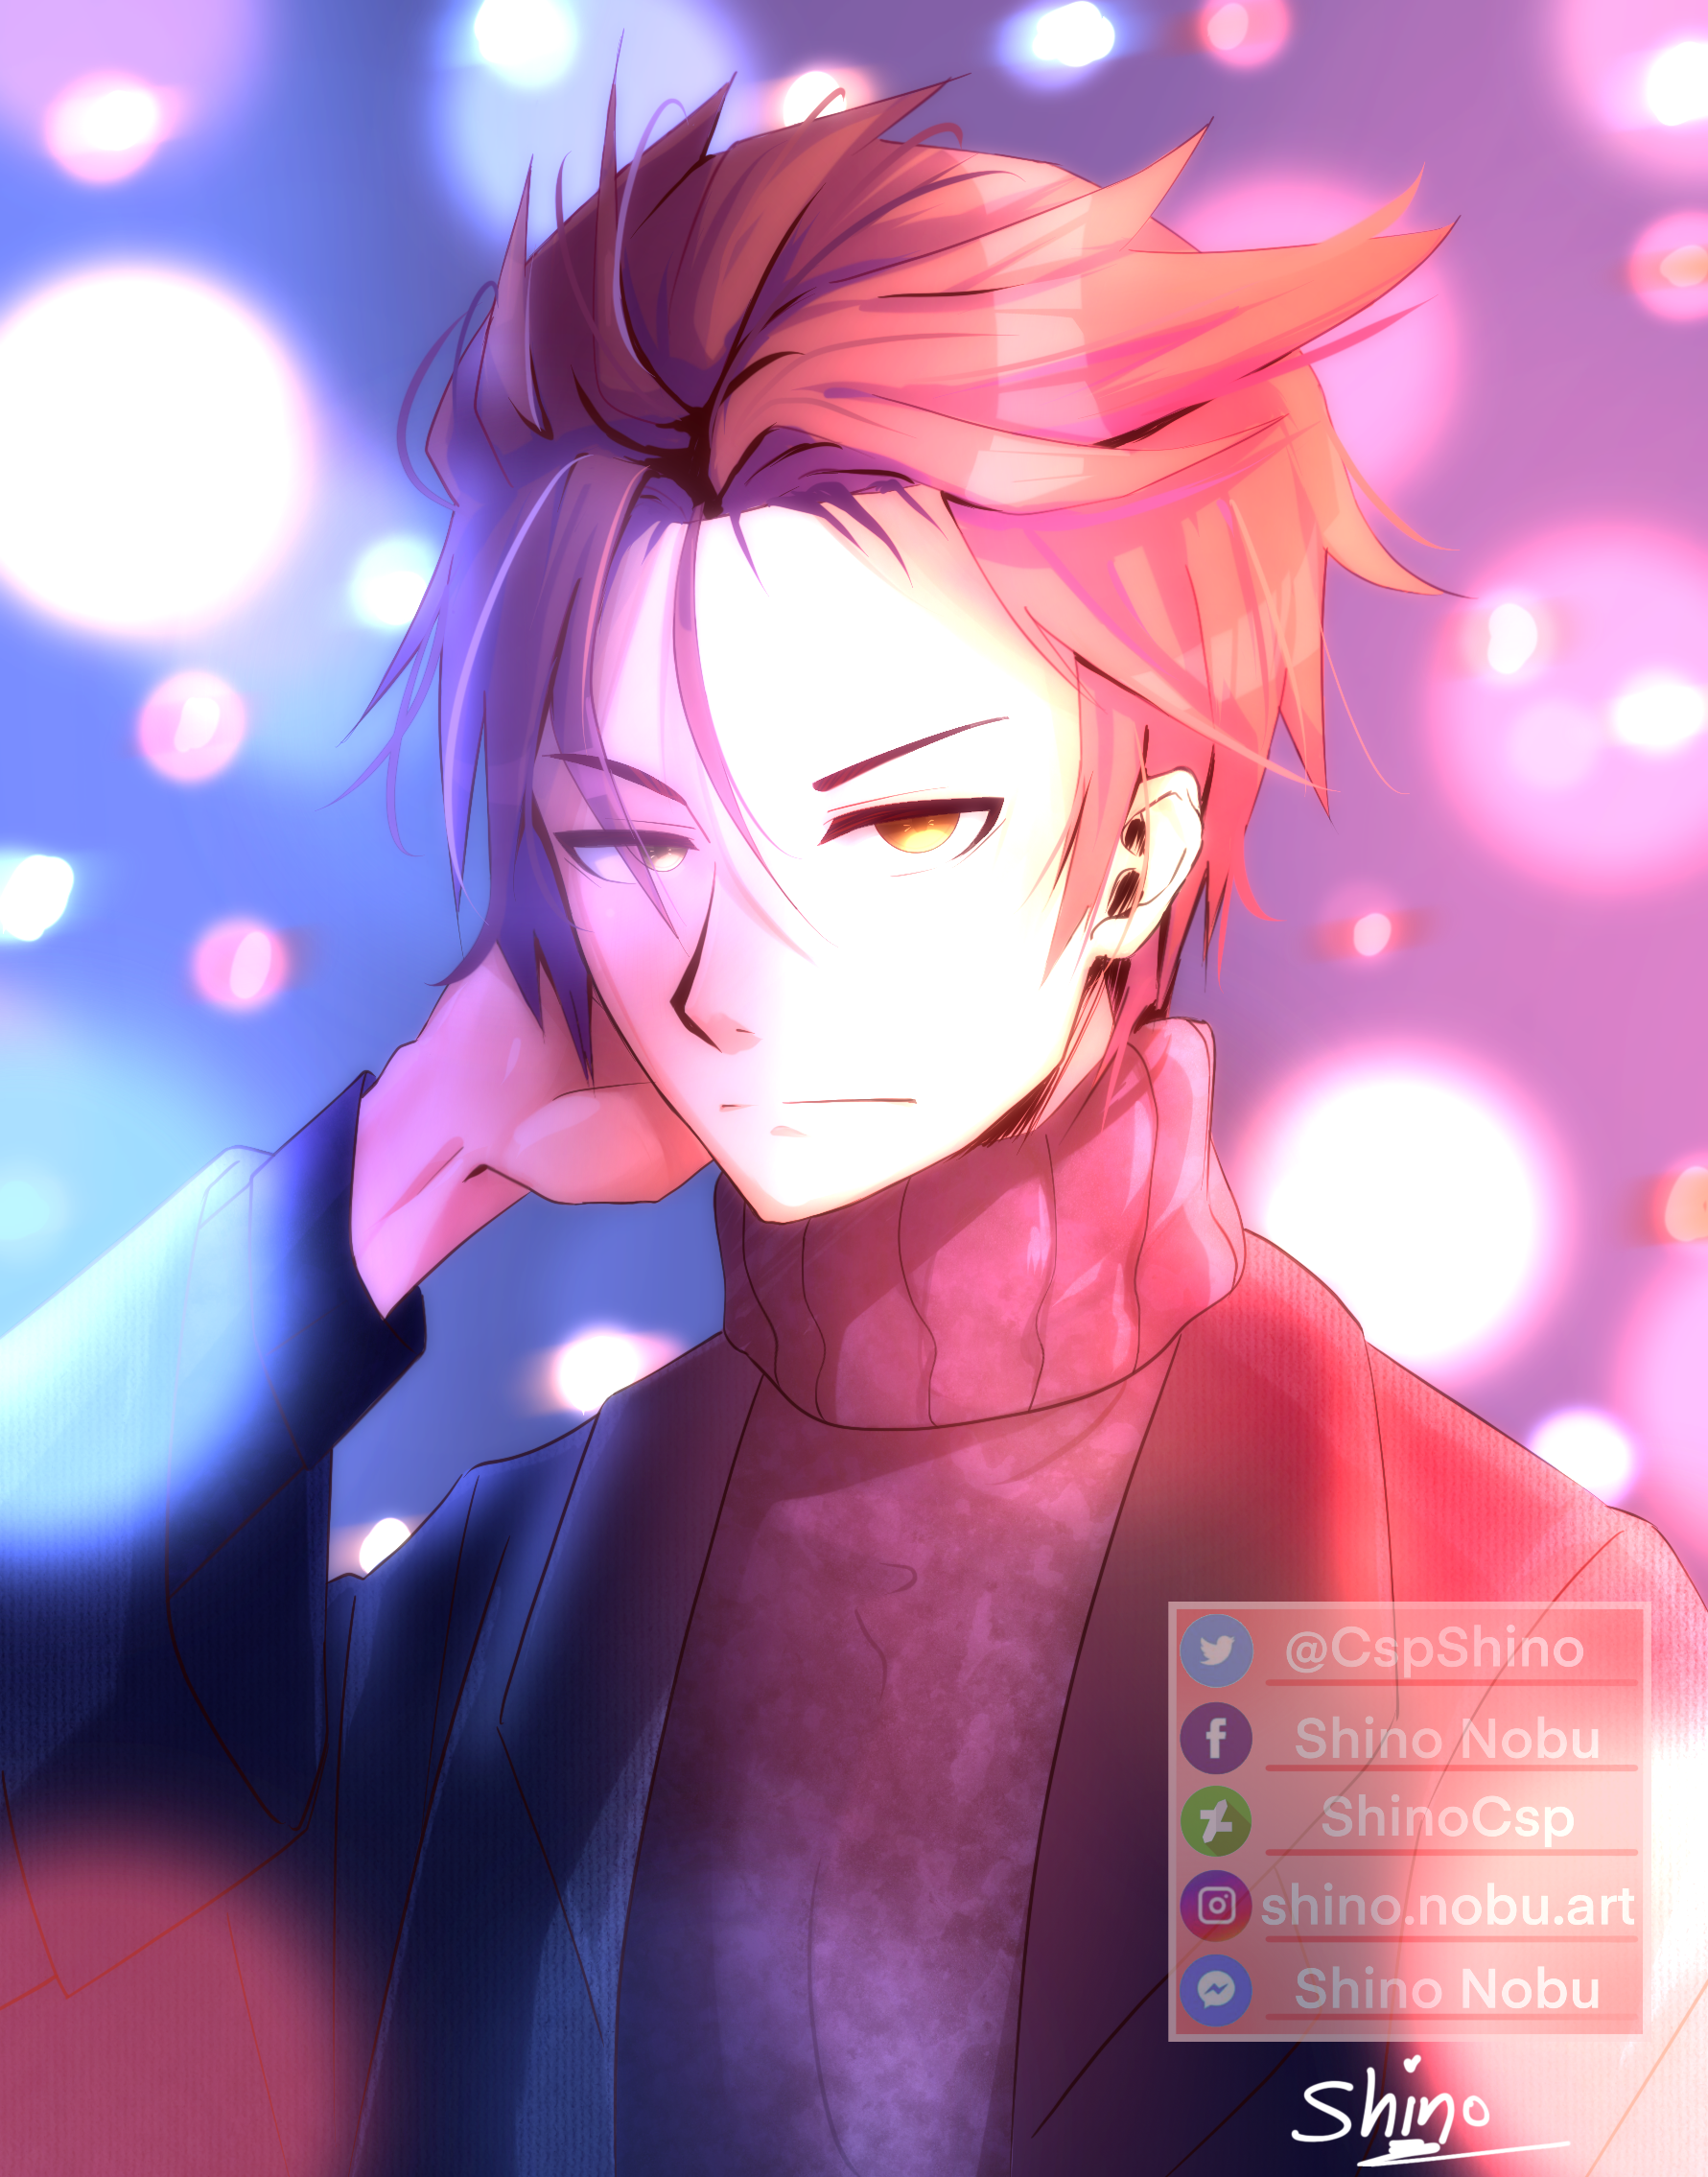 Anime guy red hair by ShinoCsp on DeviantArt